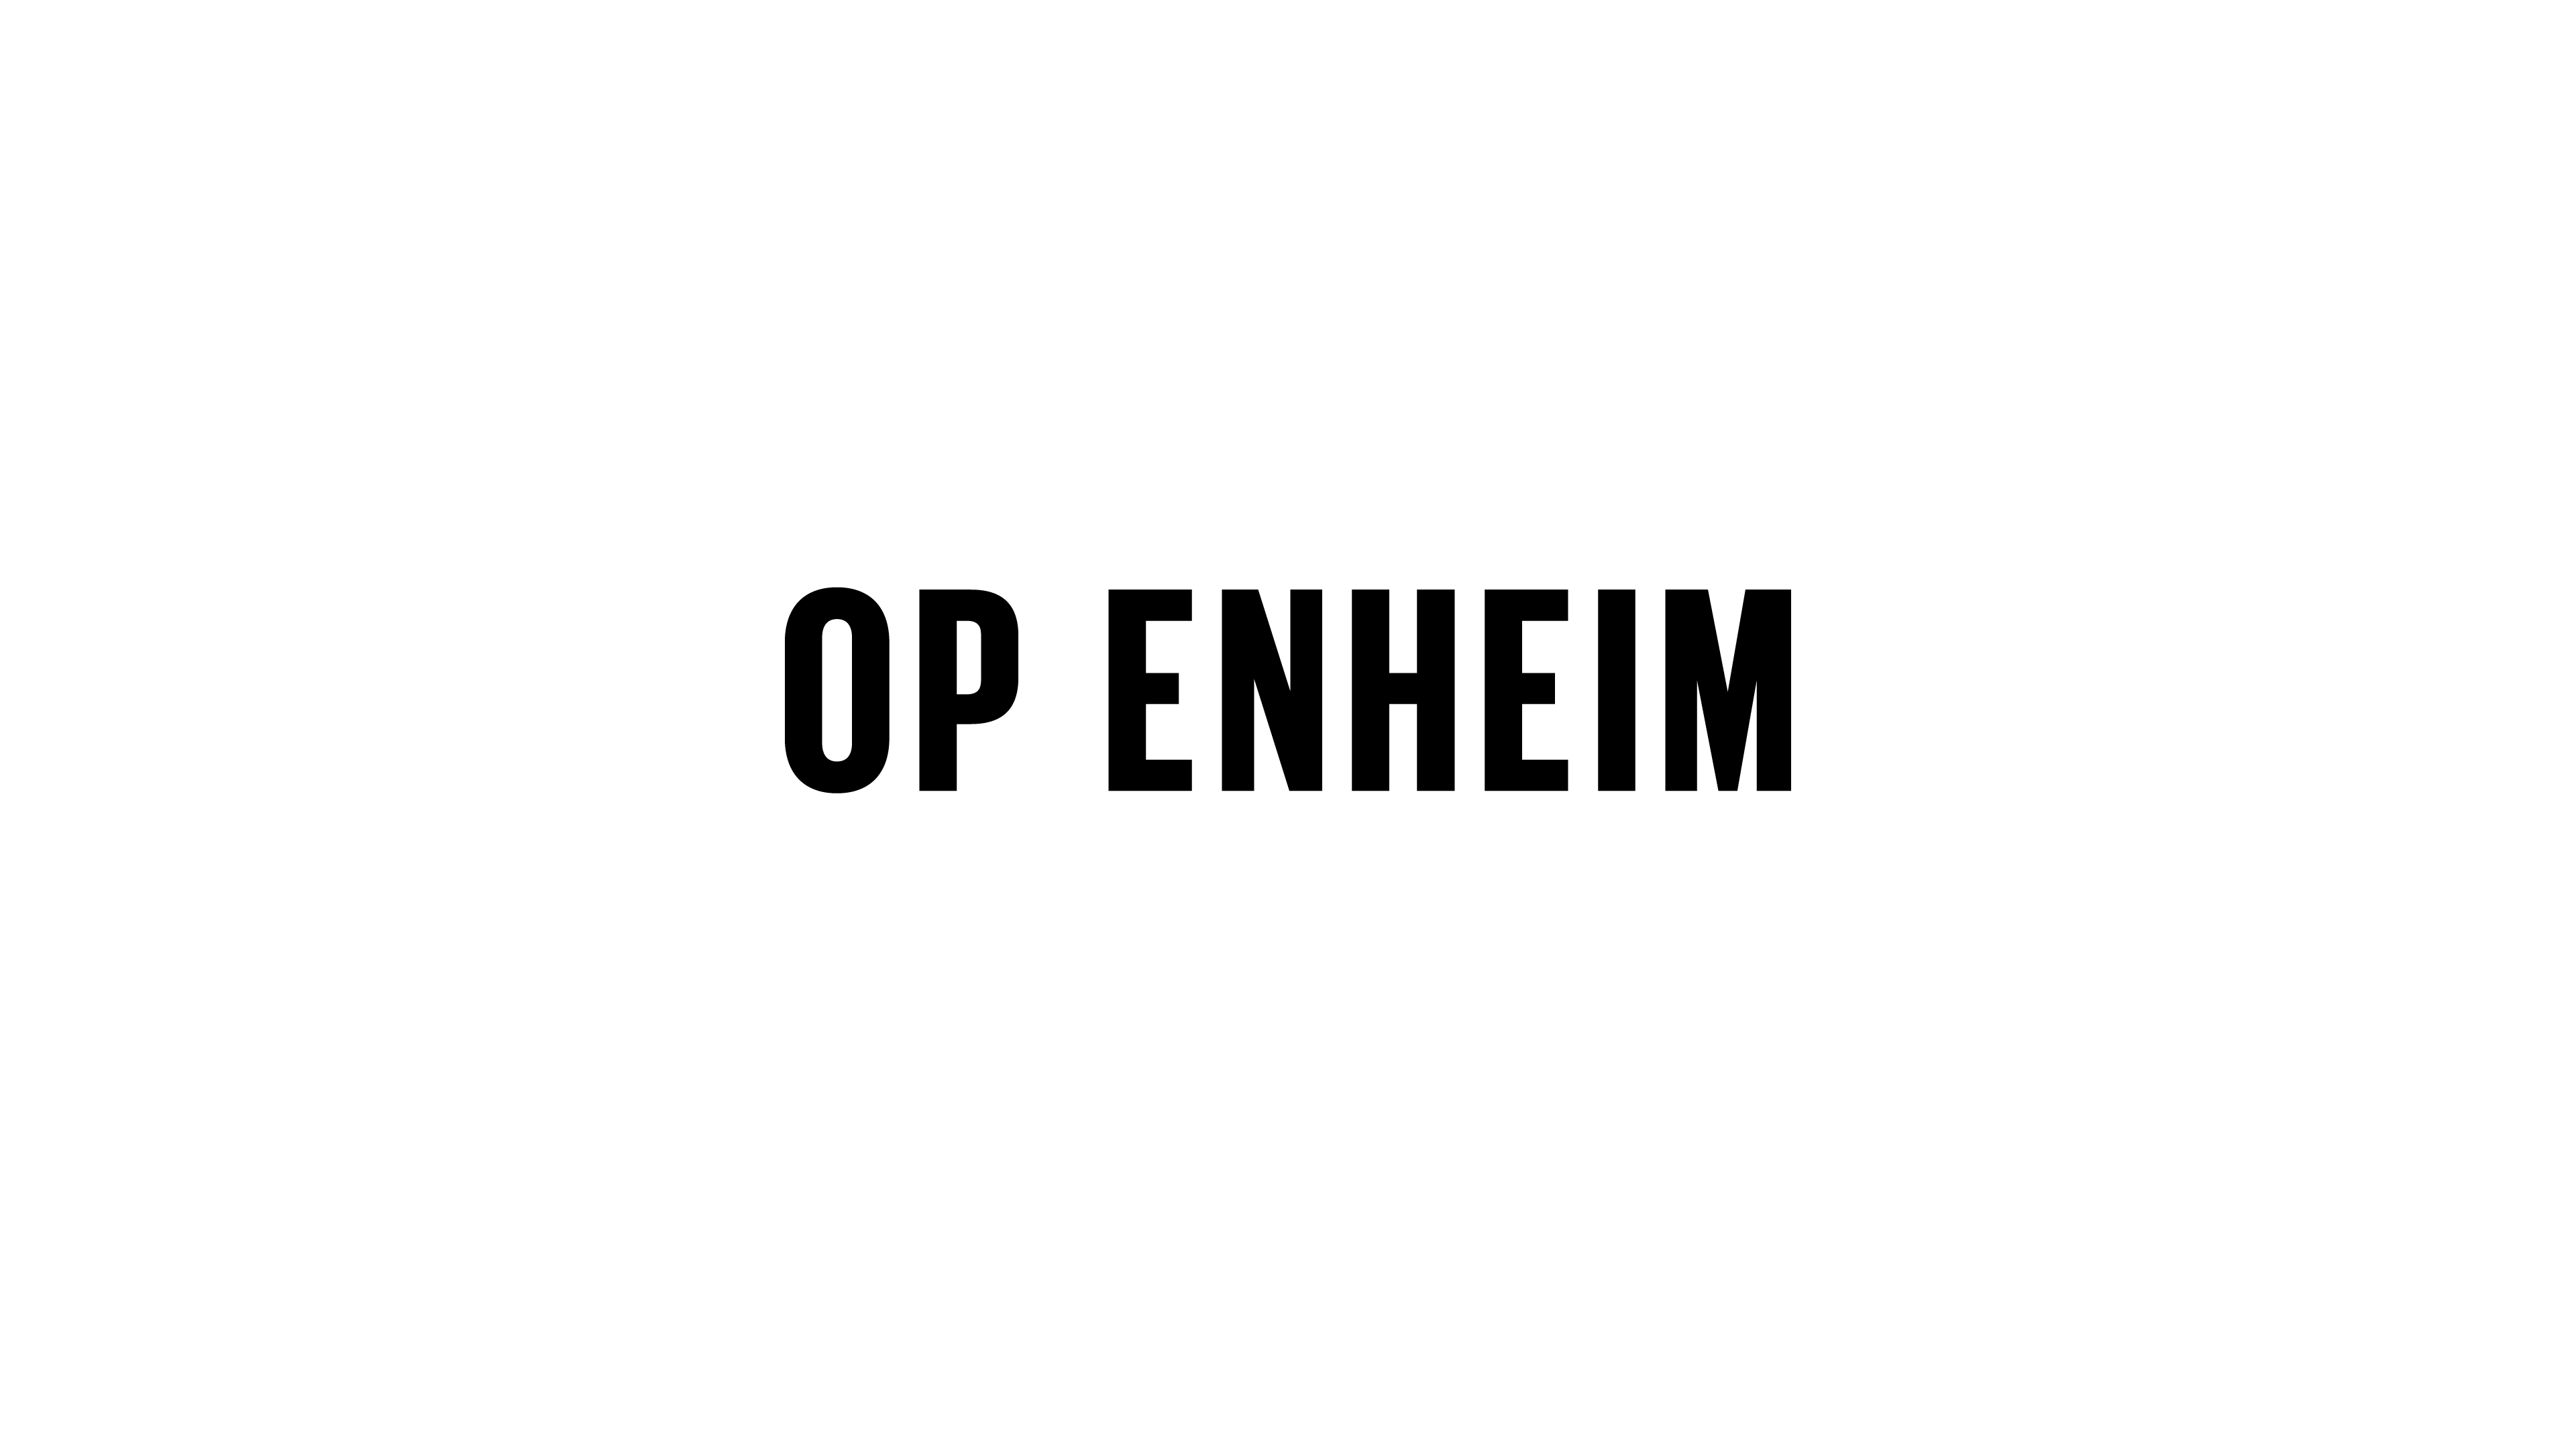 OP ENHEIM - The Codeine Design